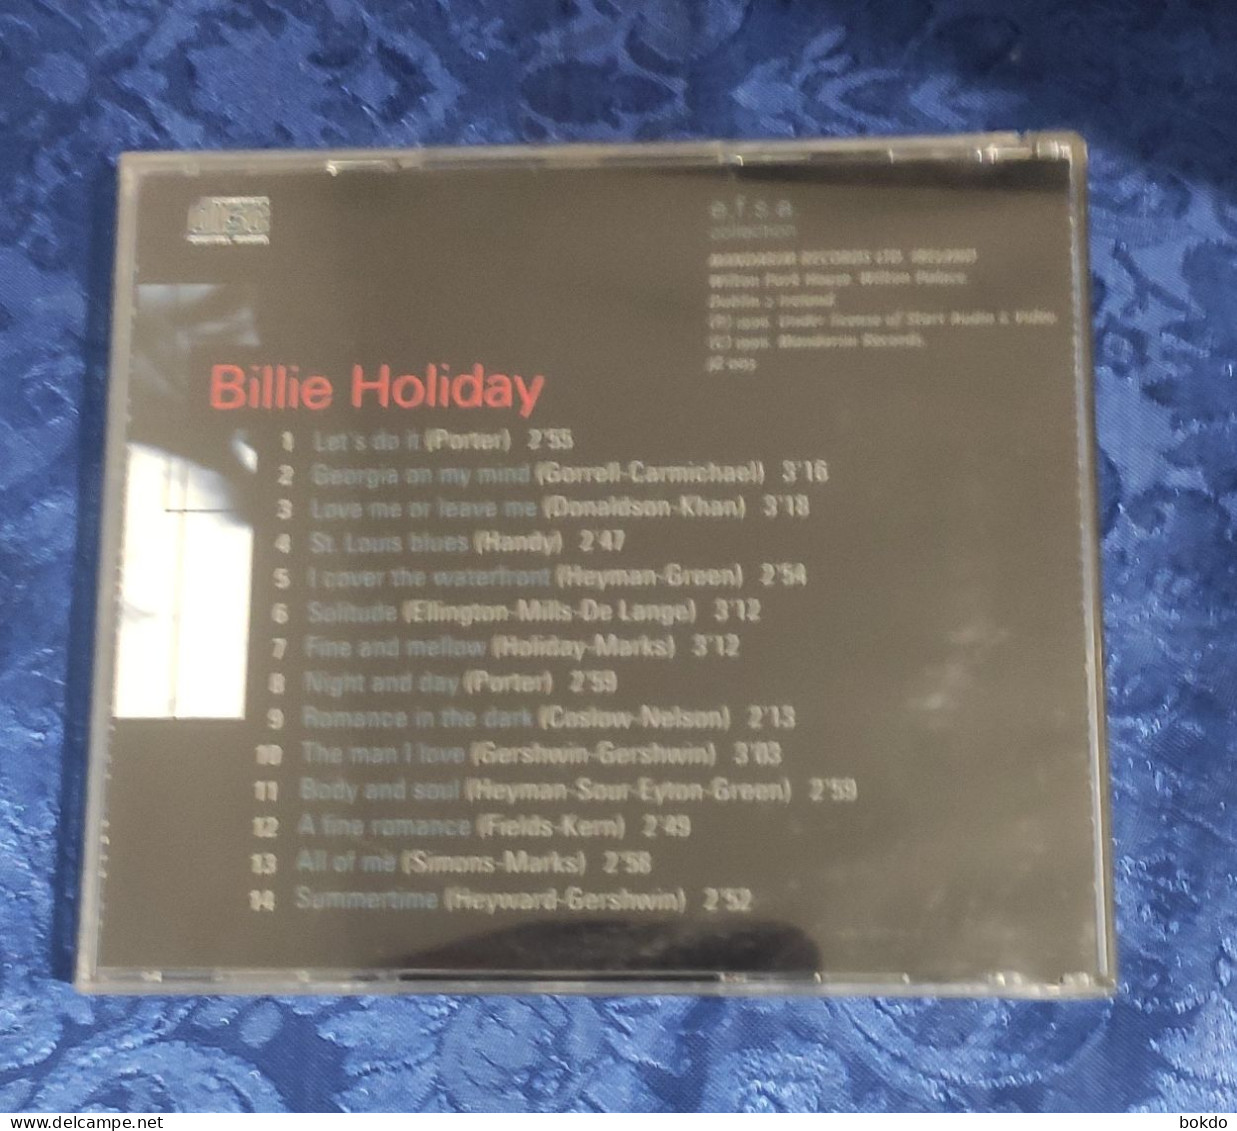 Billie Holiday - Jazz Masters - 100 Ans De Jazz - Jazz